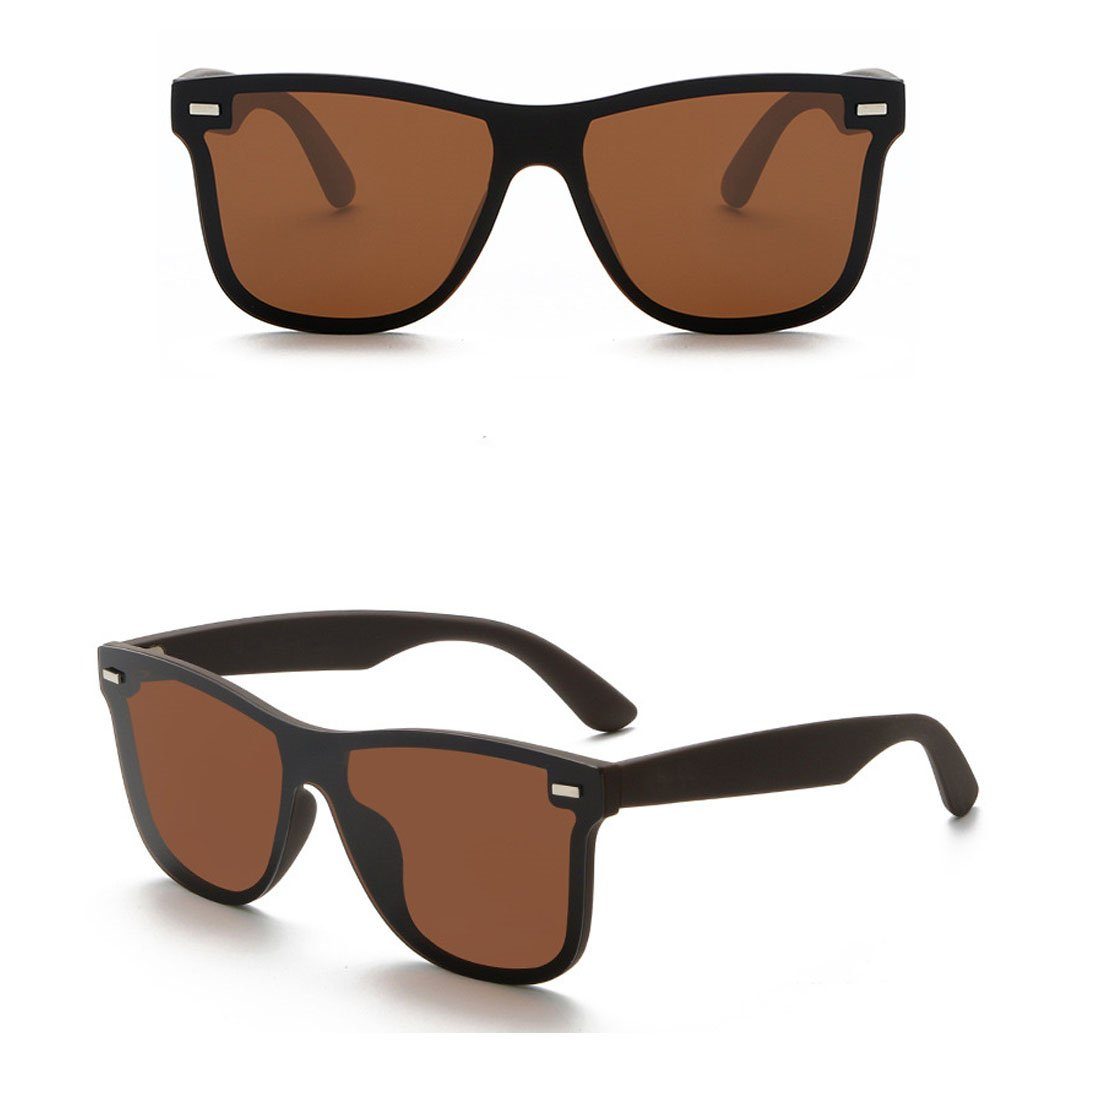 Sonnenbrille für Männer, DÖRÖY Polarisierende Outdoor-Sonnenbrille Retro-Sonnenbrille